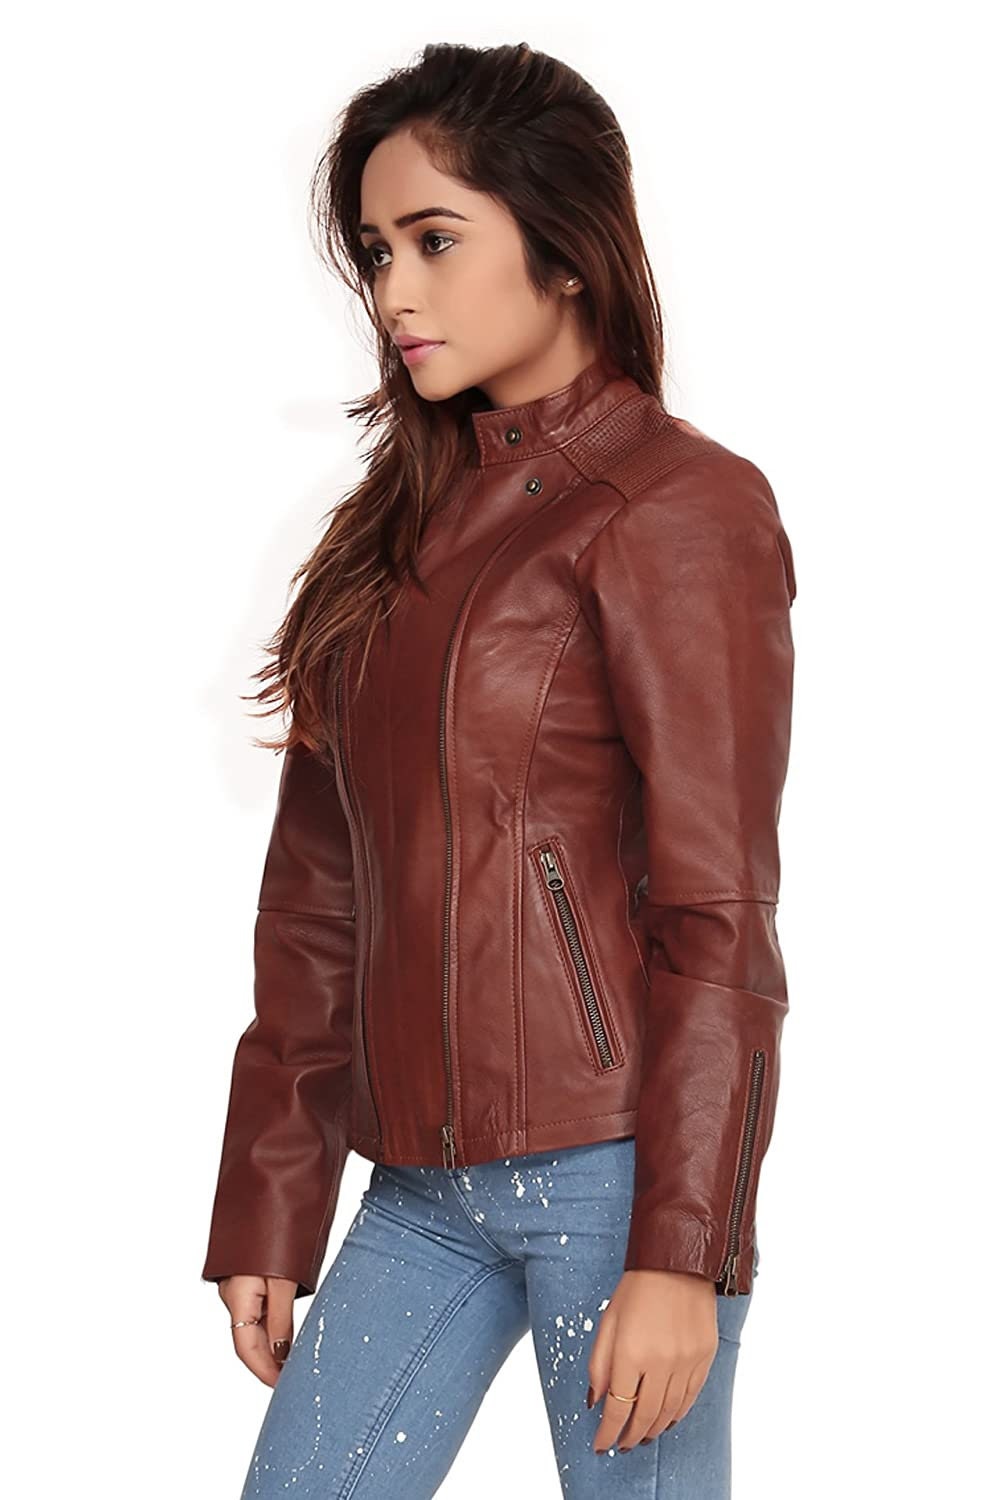 LINDSEY STREET Custom Made Genuine Leather Jacket for Women Slim Fit Crop Jacket Later Coat Biker Jacket Moto Minimalist Design Jacket